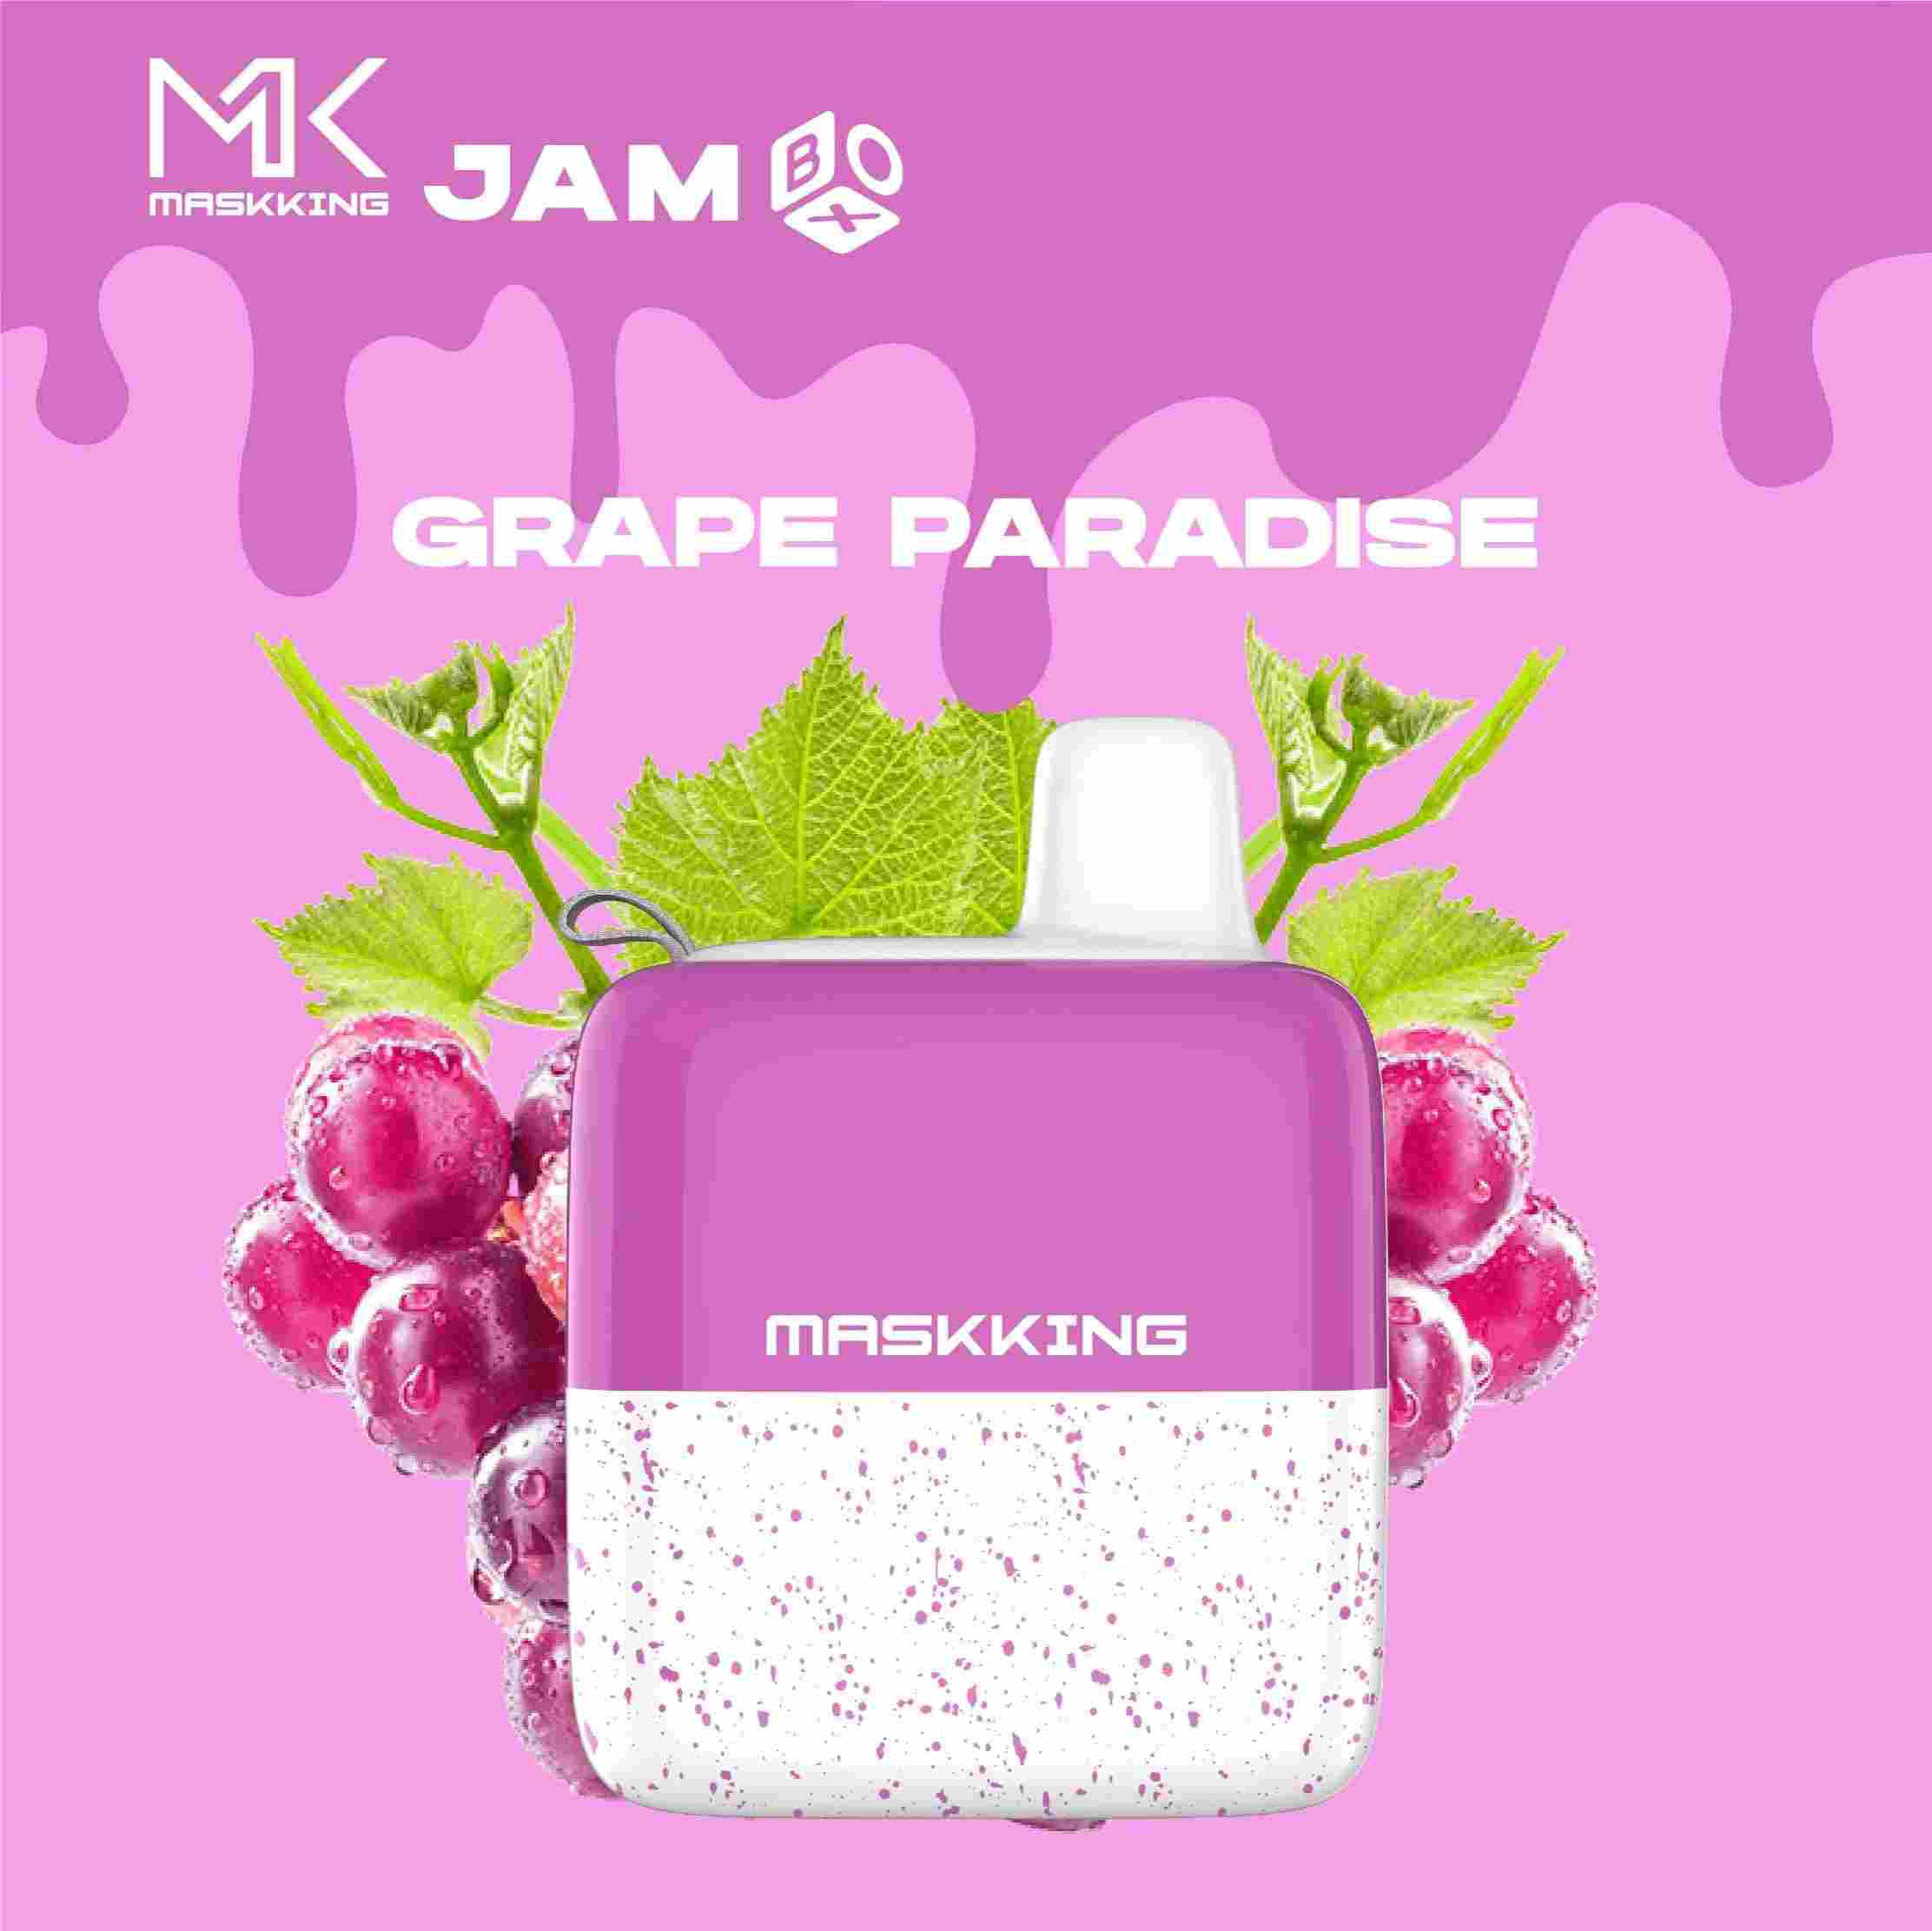 Maskking Jam Box - Grape Paradise